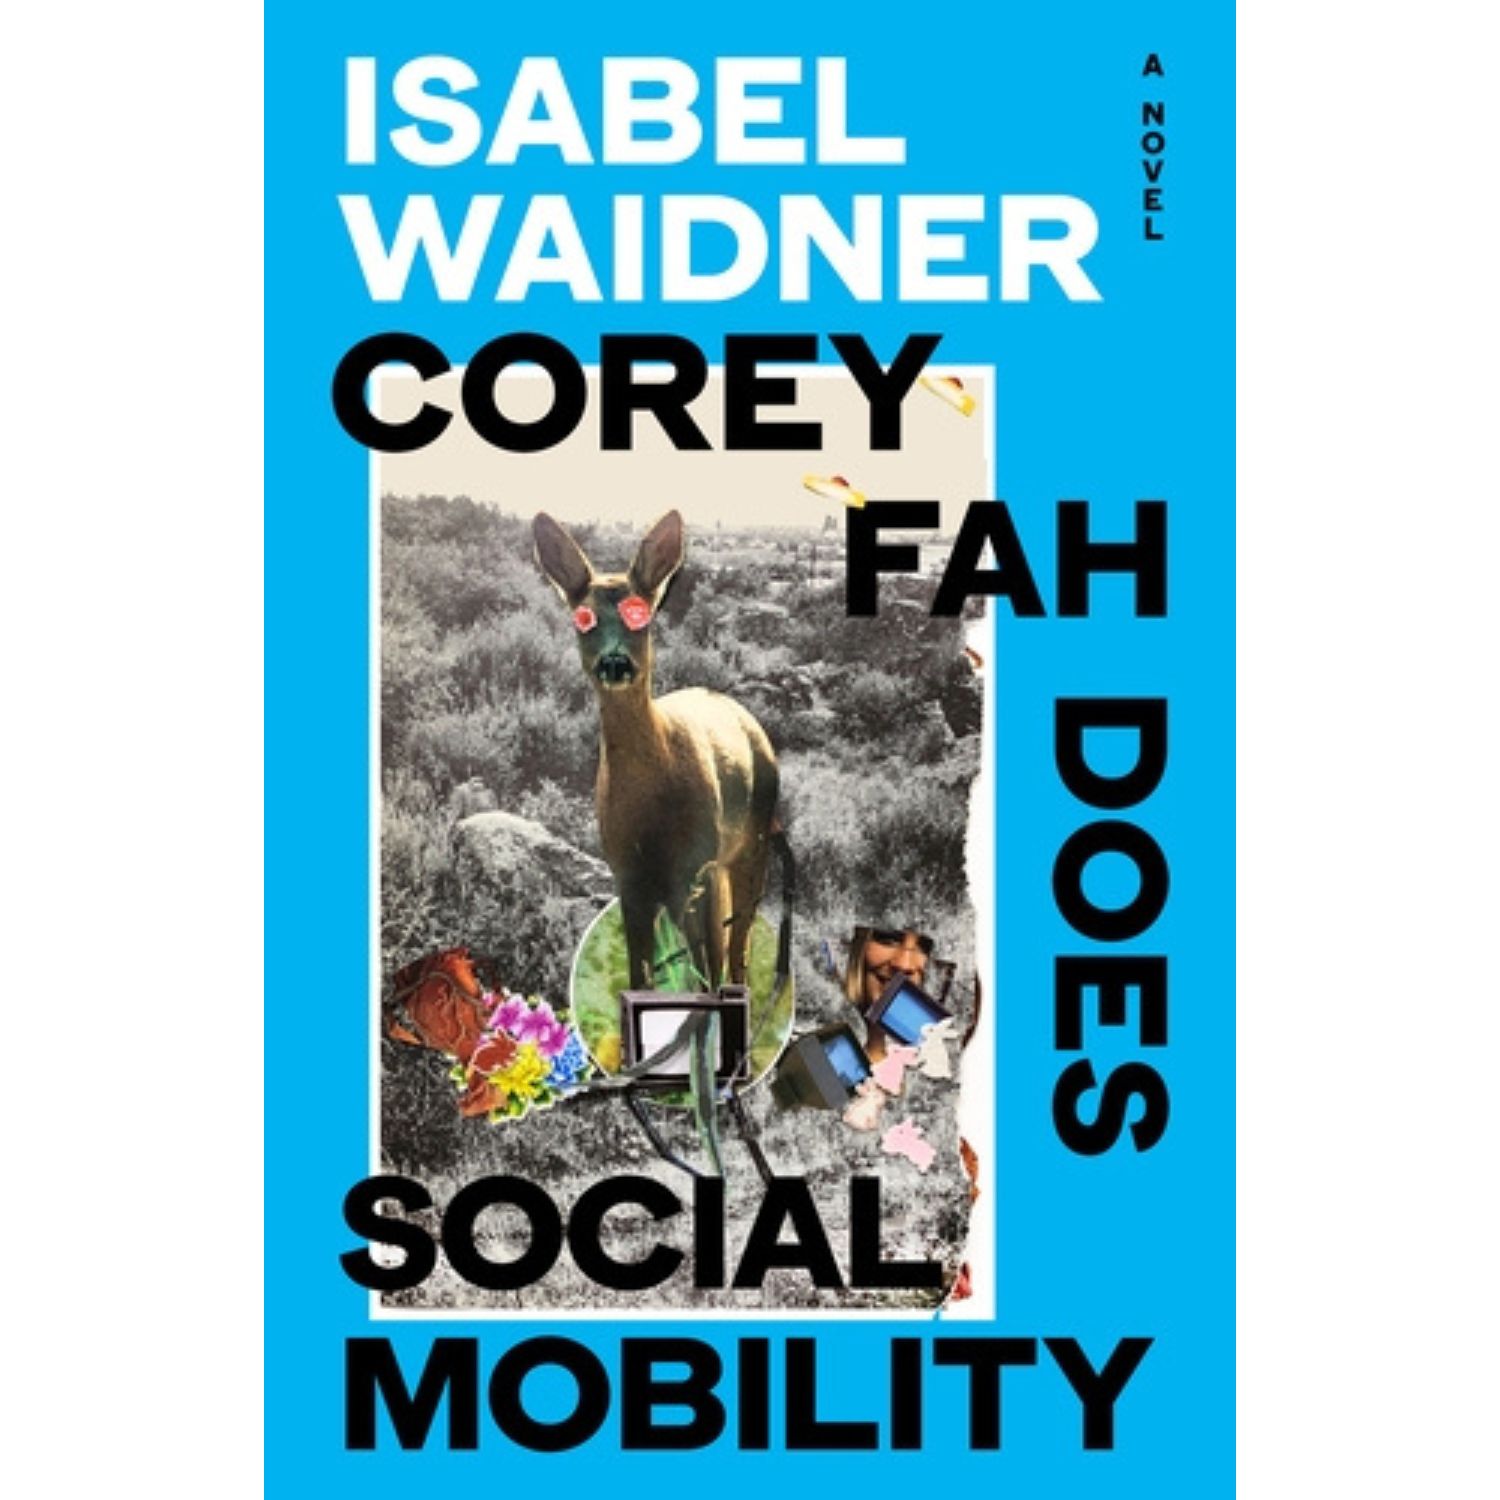 Corey Fah Does Social Mobility, Isabel Waidner